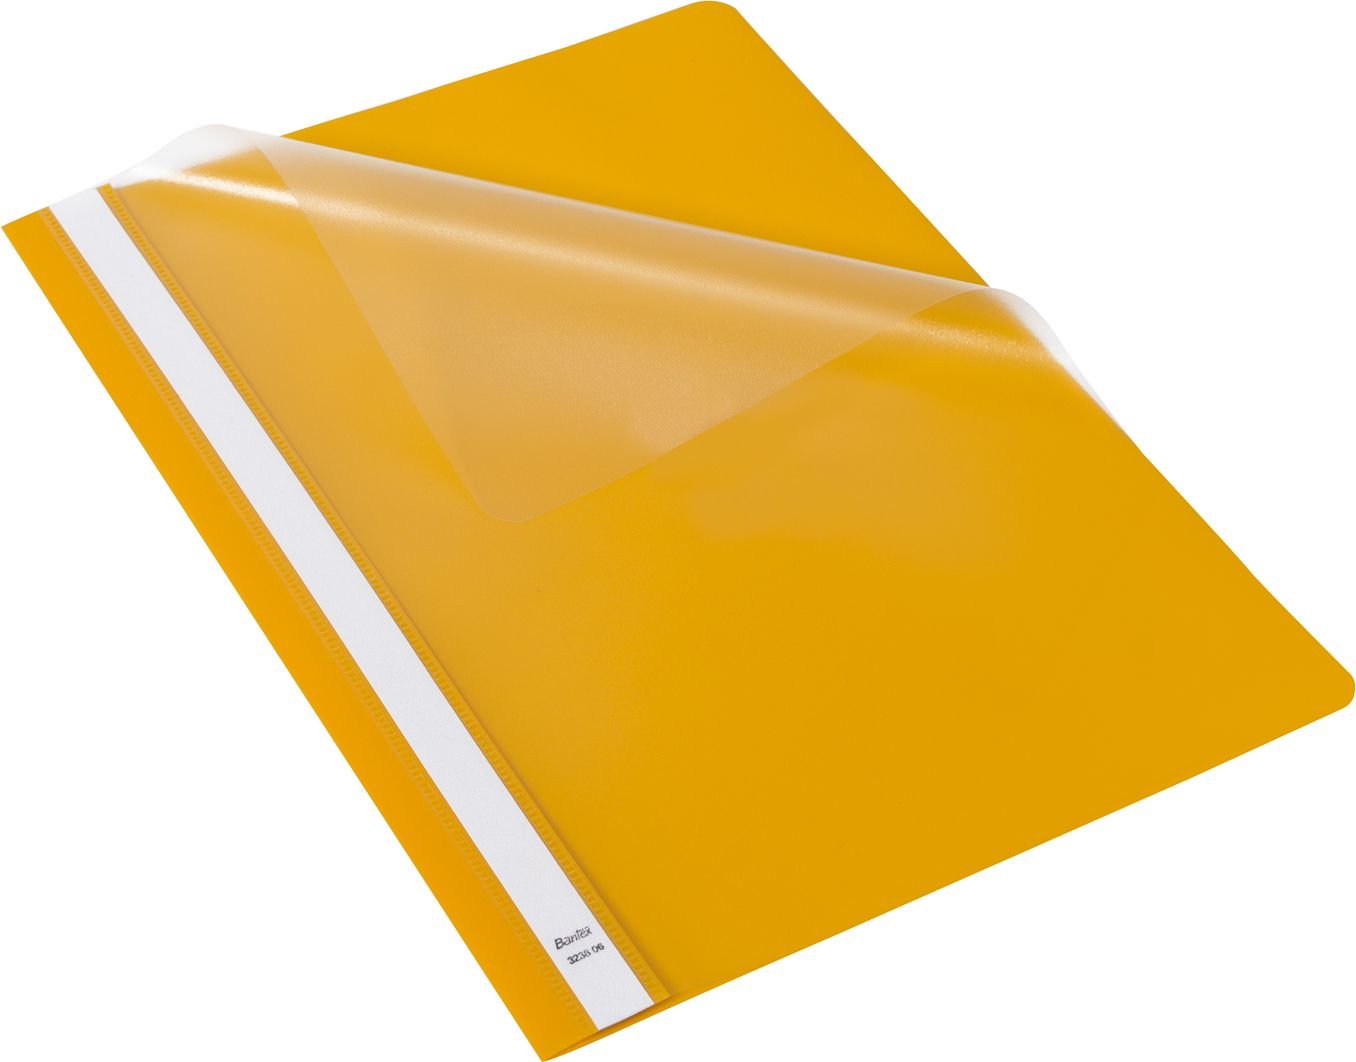 Bantex Folder Standard A4 cu mustata galben 25 buc